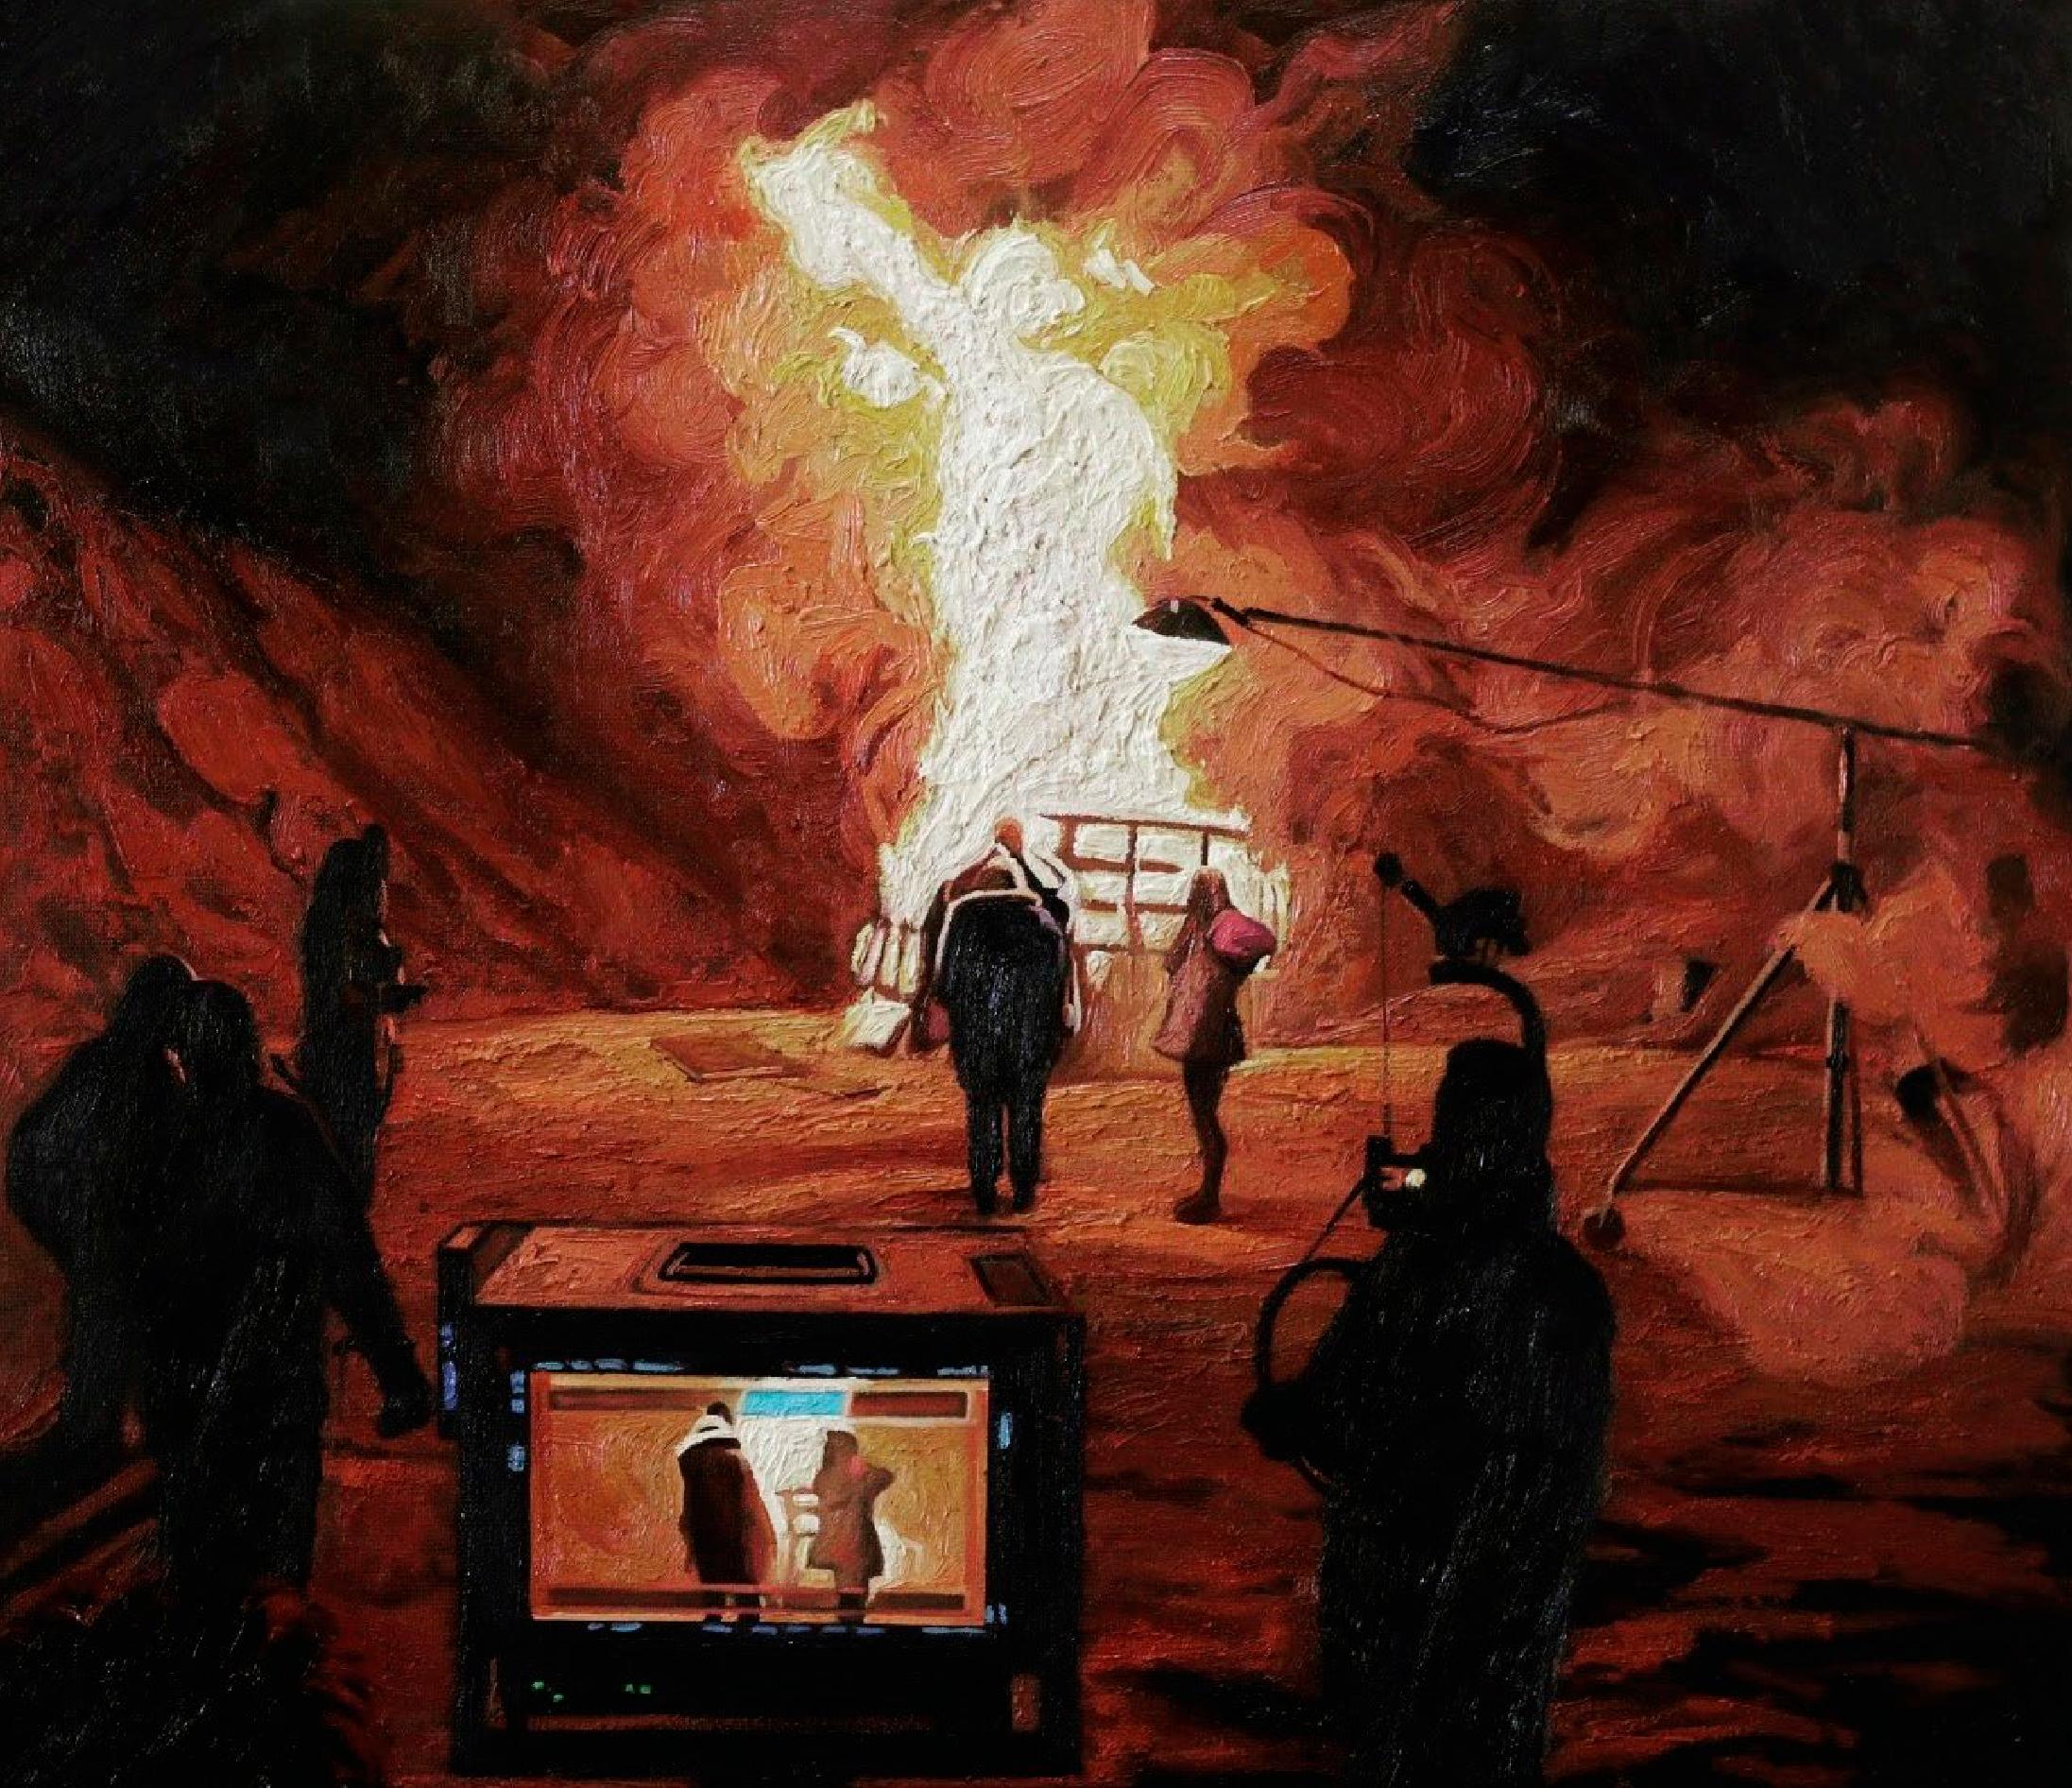 Jose Ricardo Contreras Gonzalez Figurative Painting - Fire, Oil on canvas, Landscape Still life,  Painting 